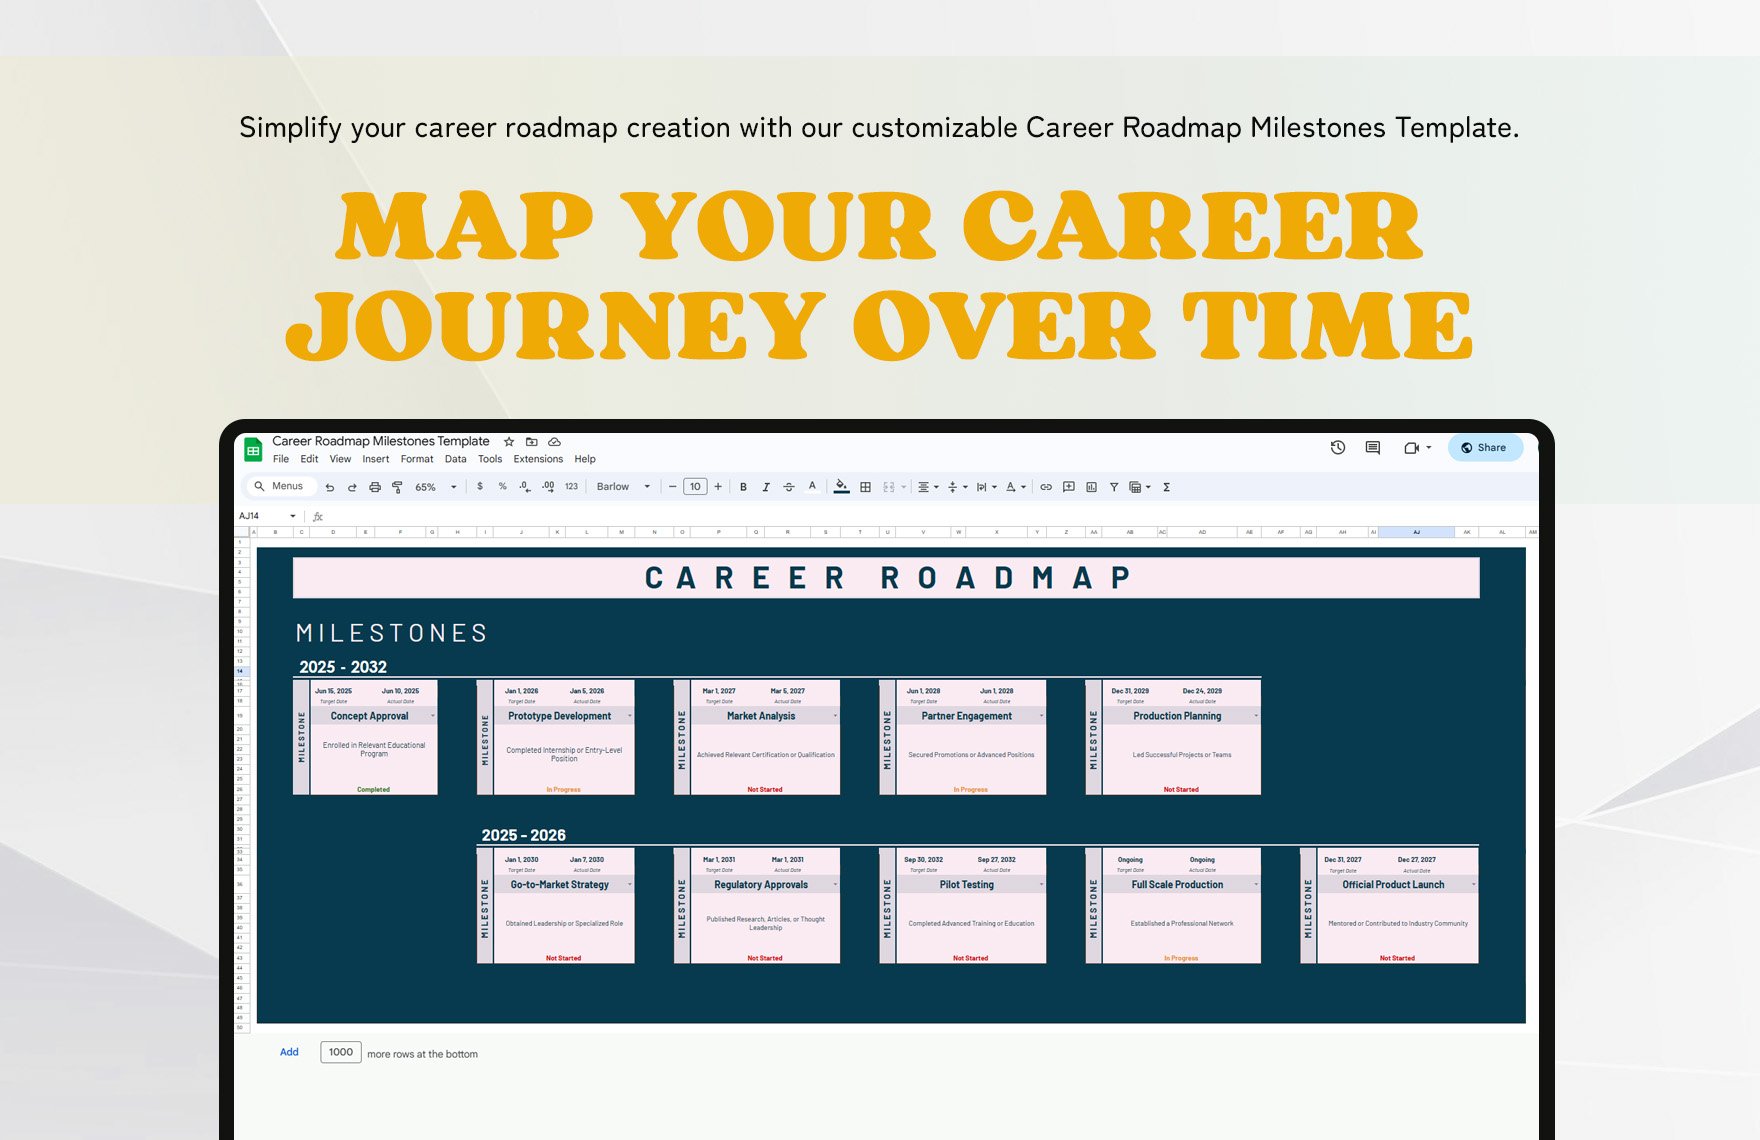 Career Roadmap Milestones Template